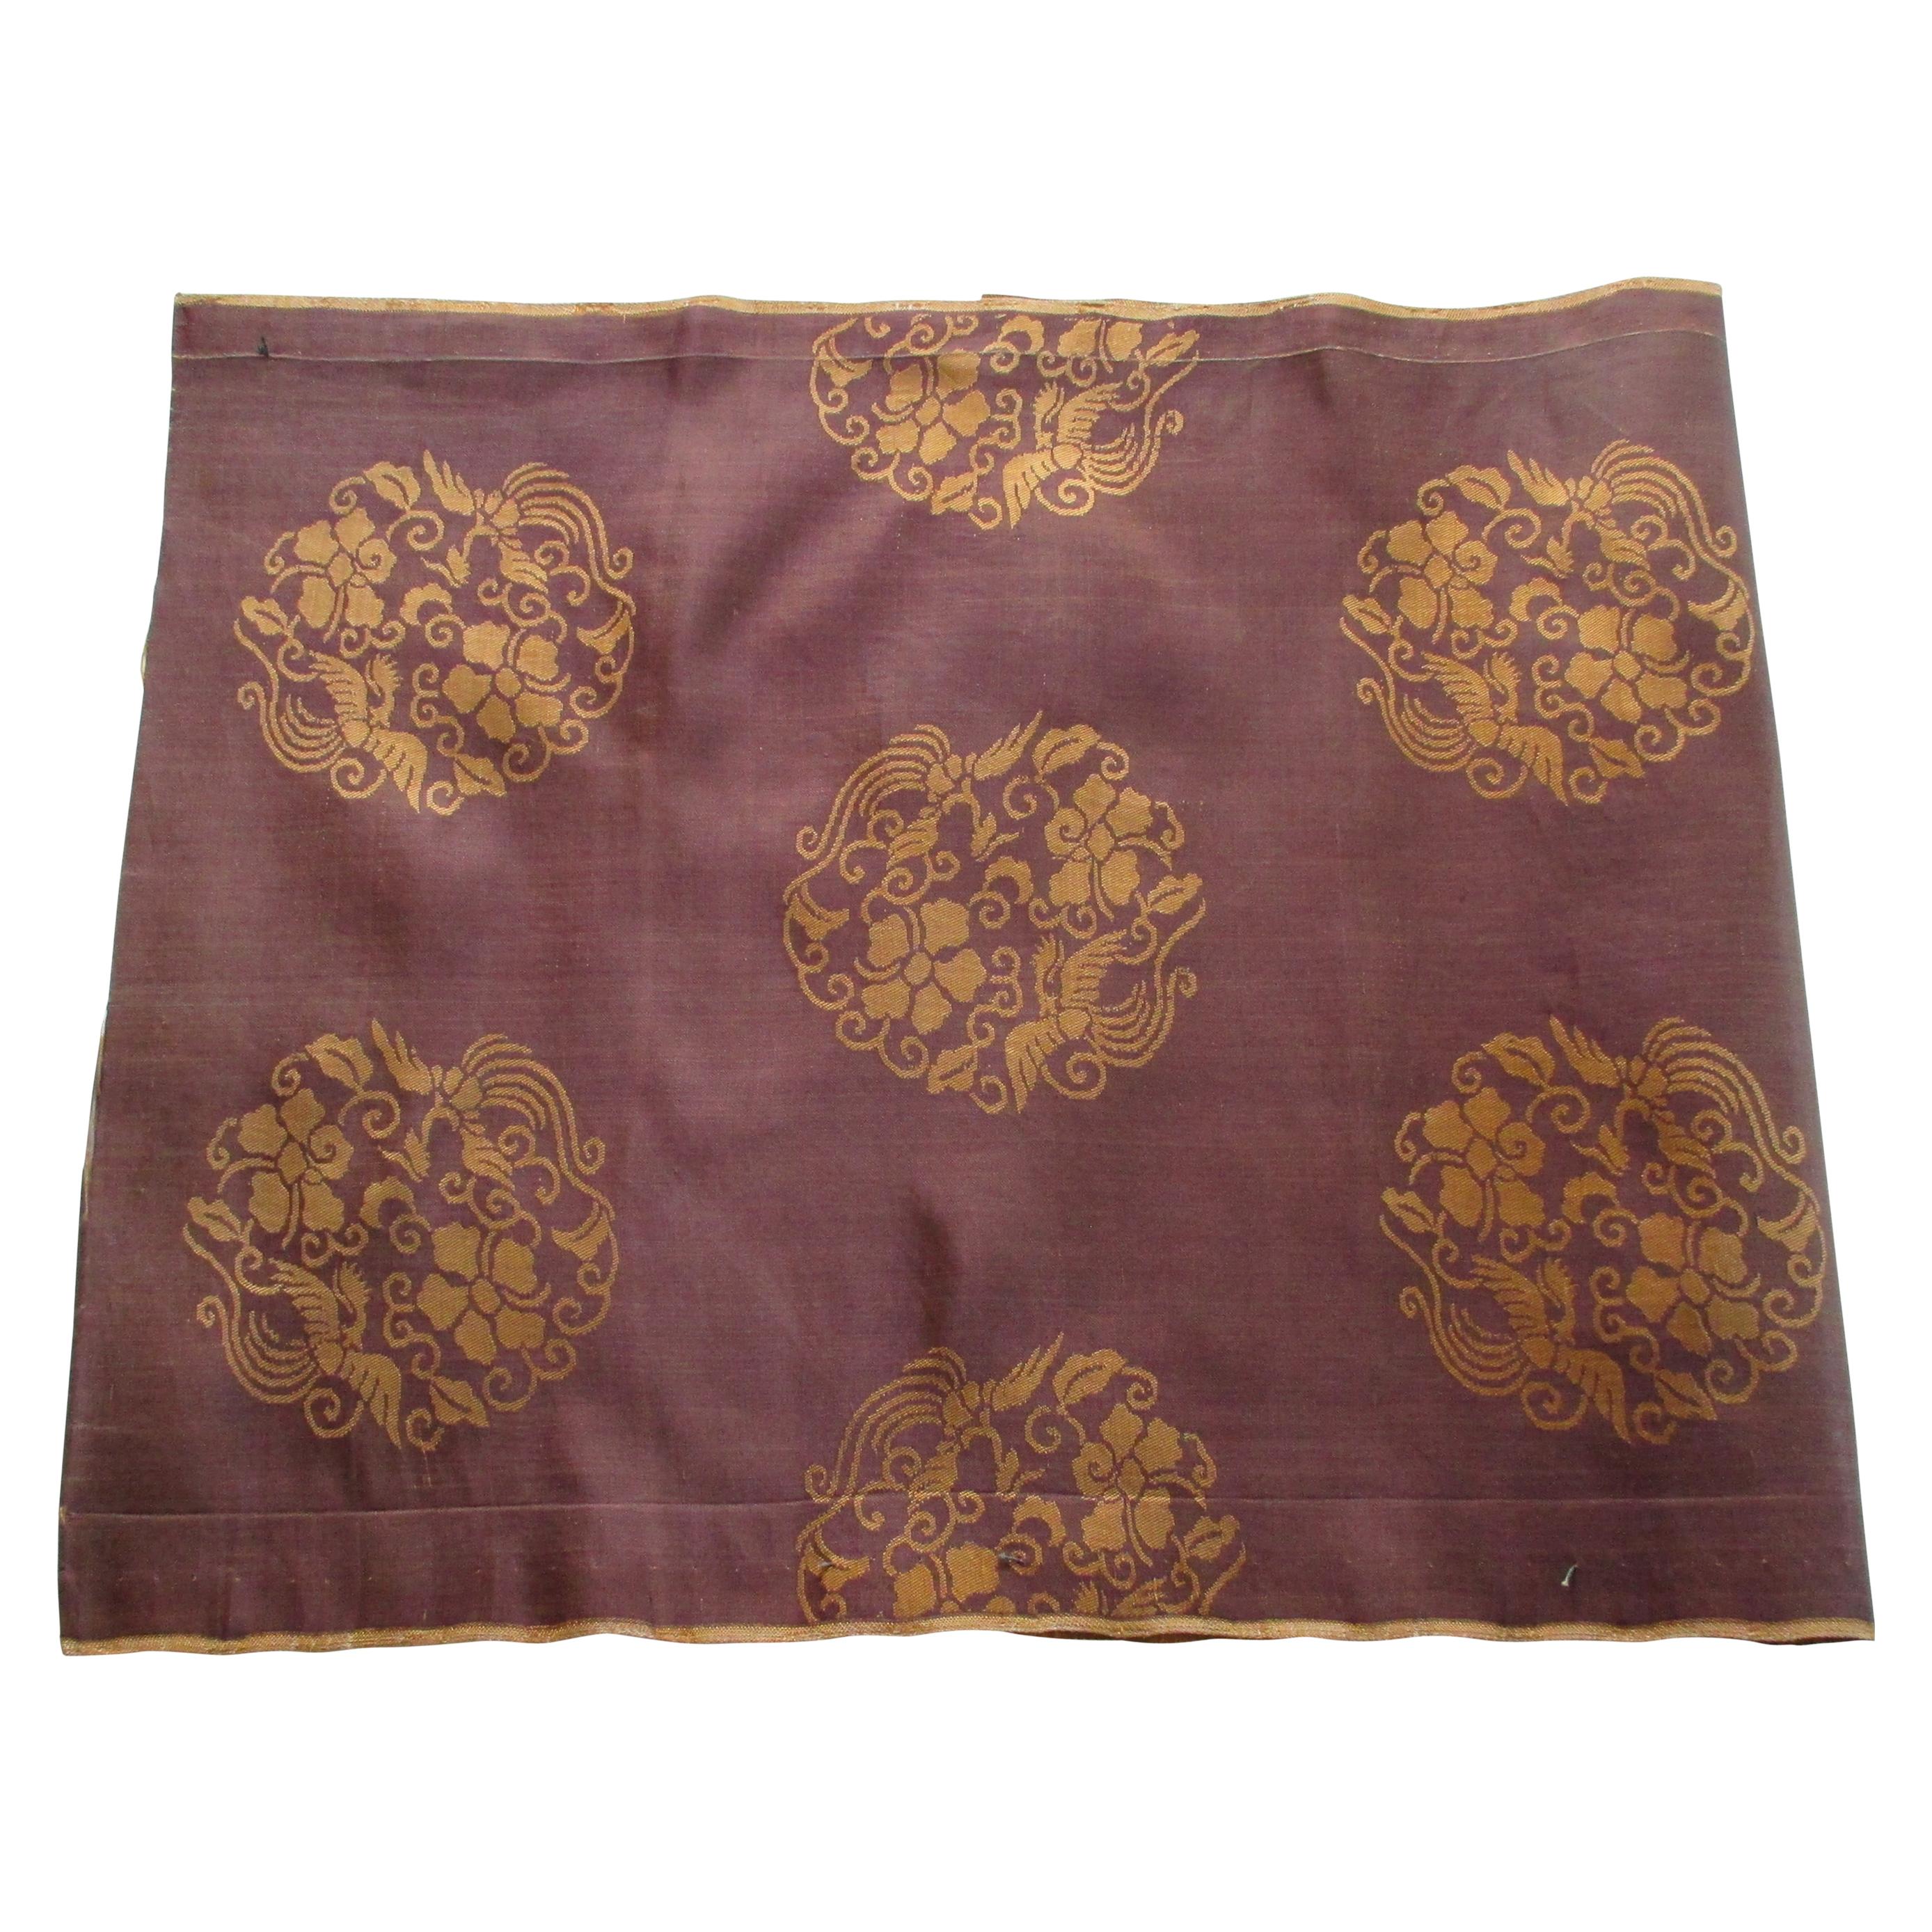 Vintage Obi Brown and Gold Silk Textile